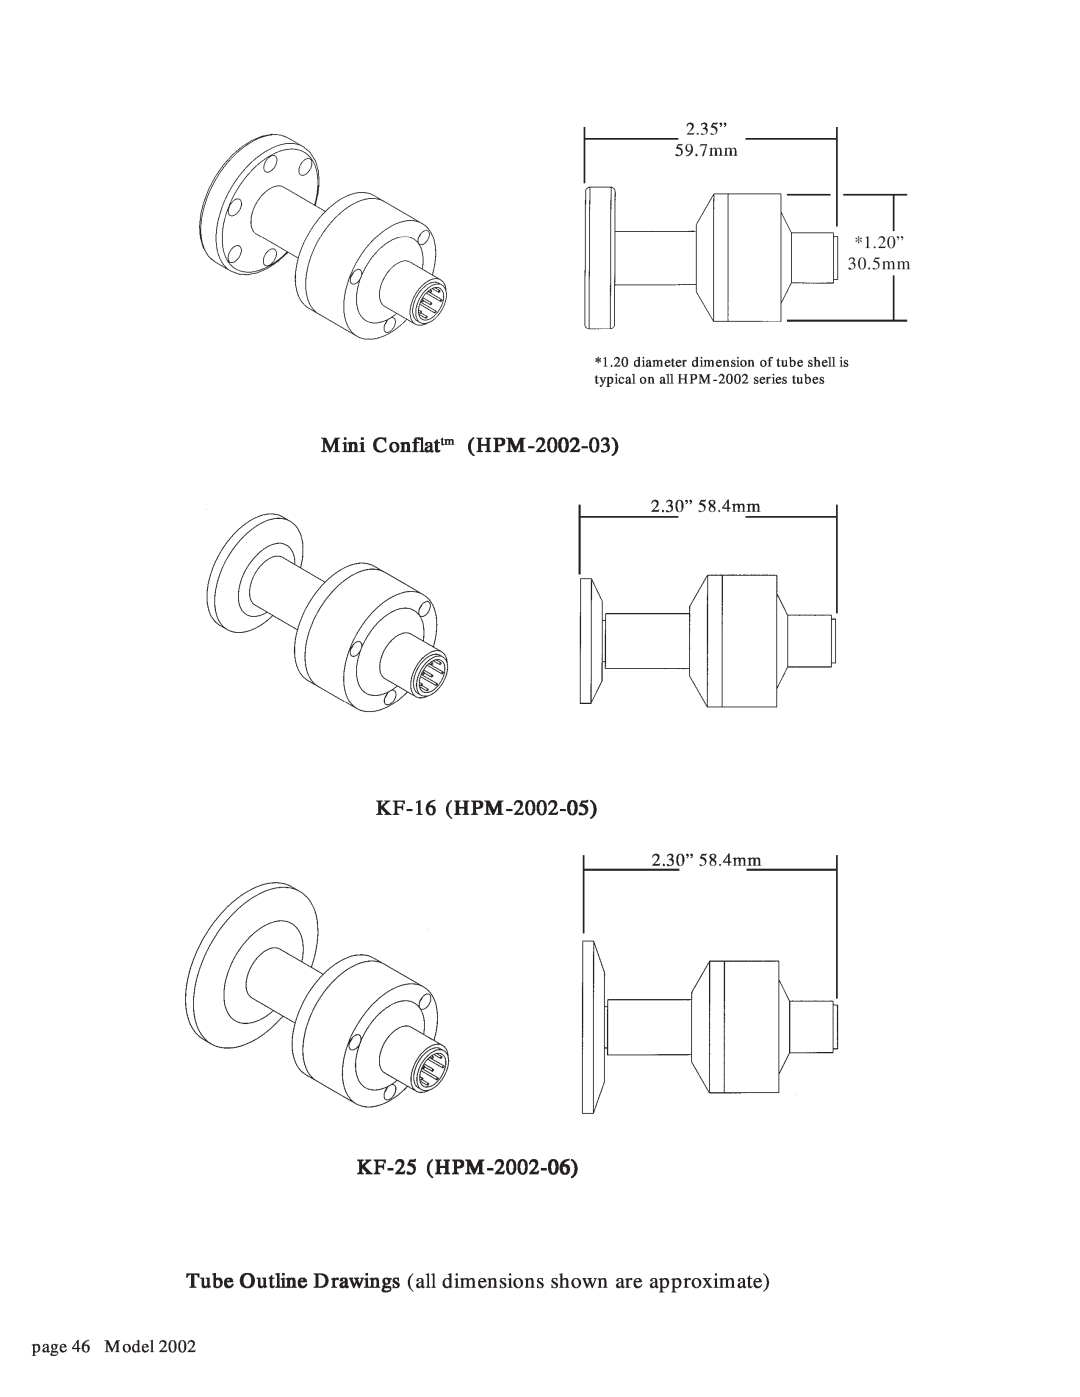 Teledyne instruction manual Mini Conflattm HPM-2002-03, KF-16 HPM-2002-05, KF-25 HPM-2002-06 